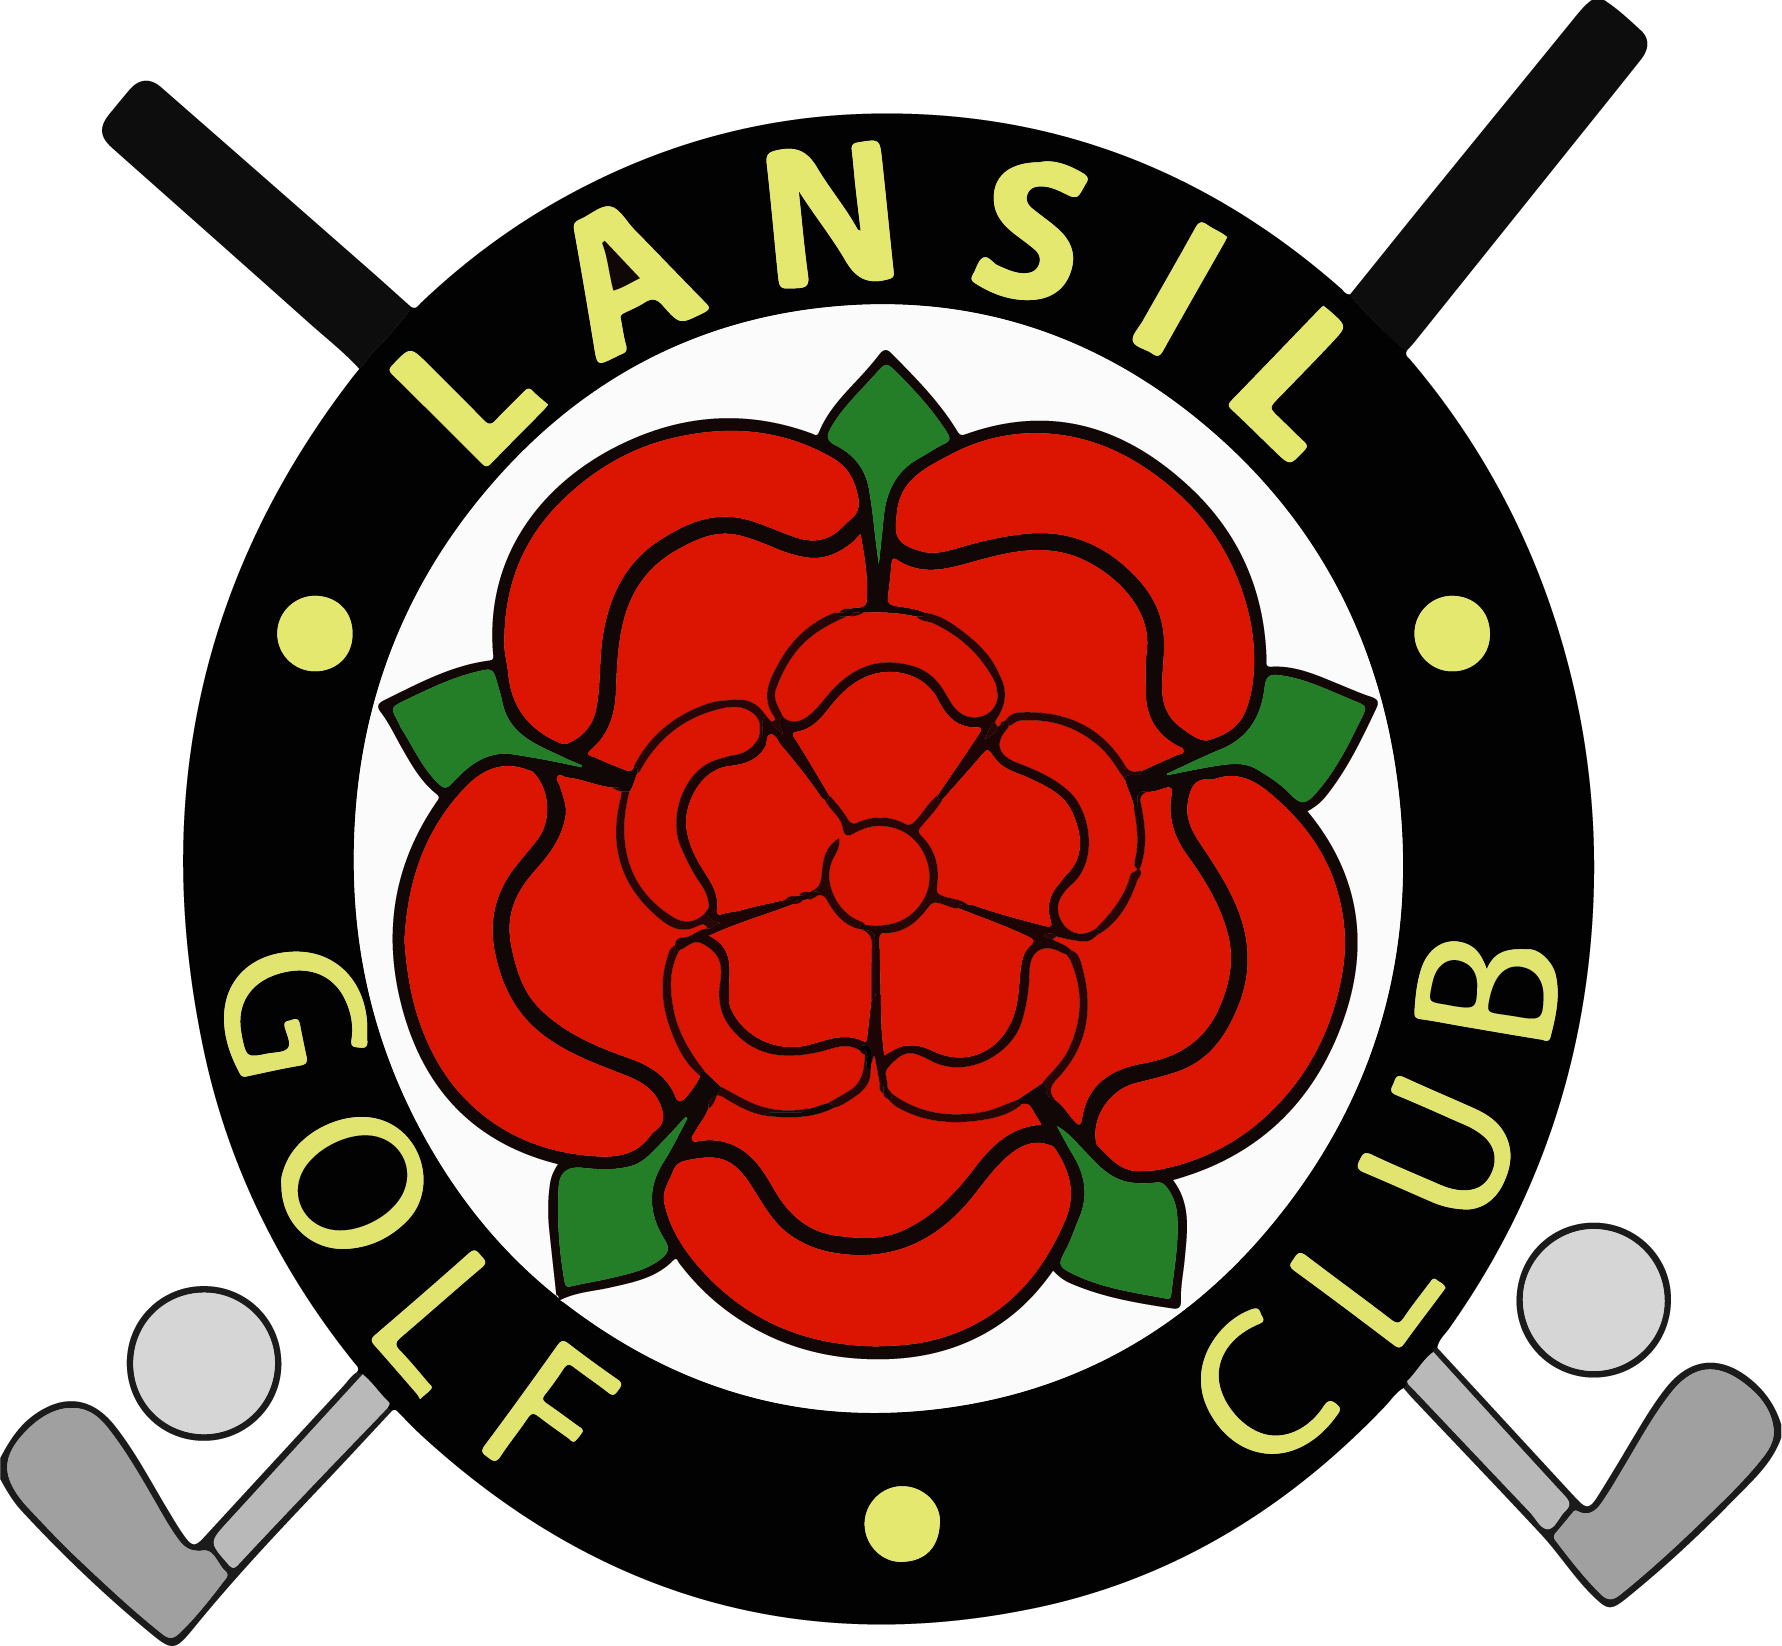 Lansil Golf Club